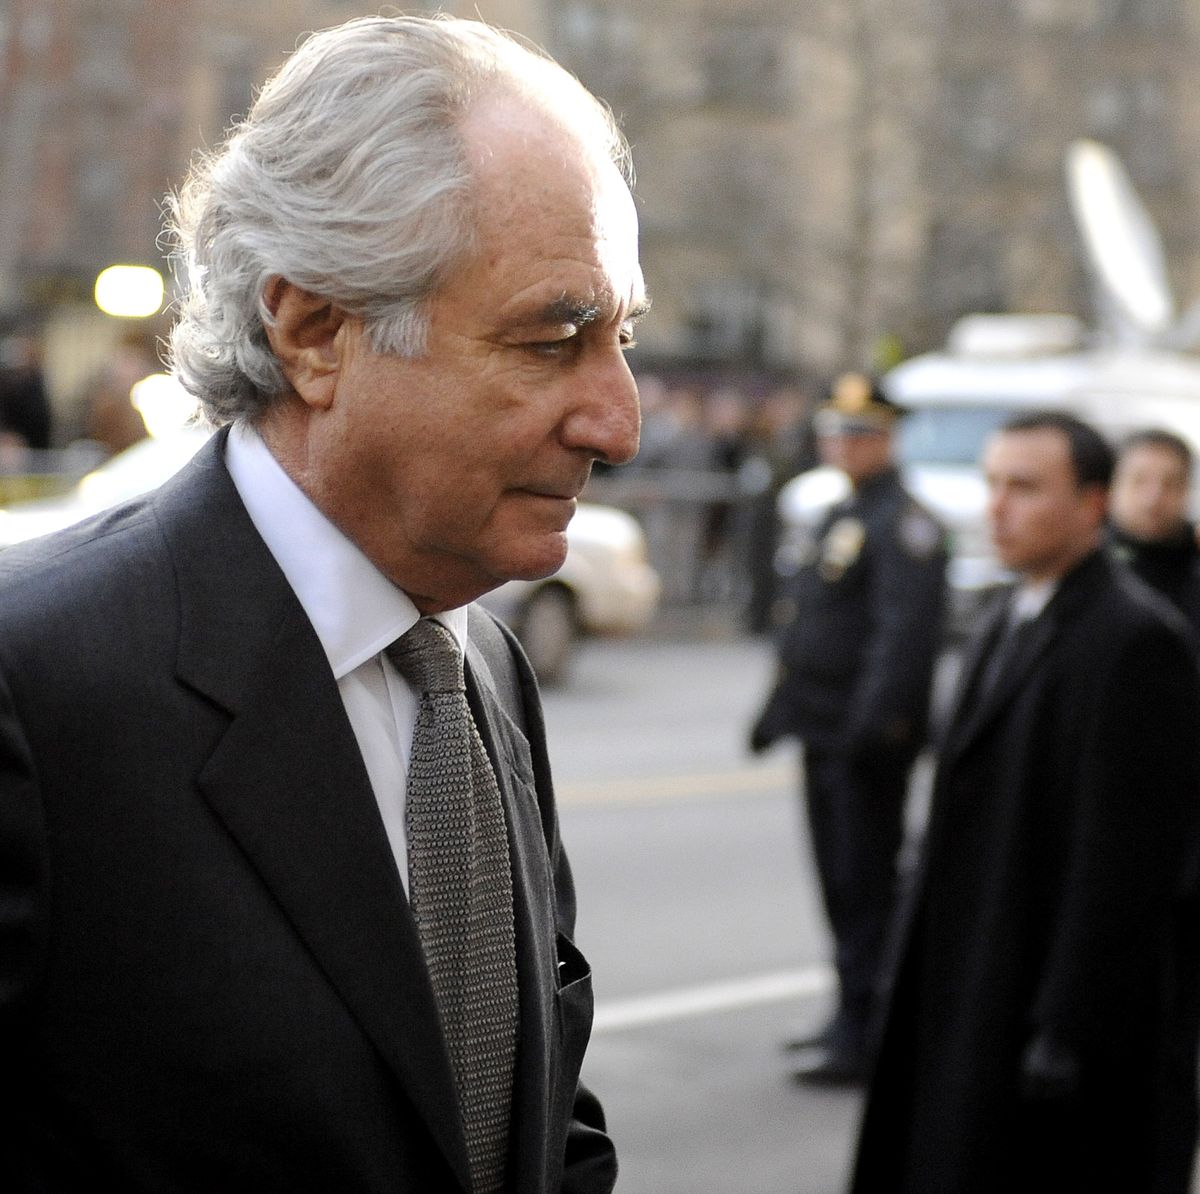 Bernie Madoff Pleads Guilty To $50 Billion Scheme To De-Fraud Investors